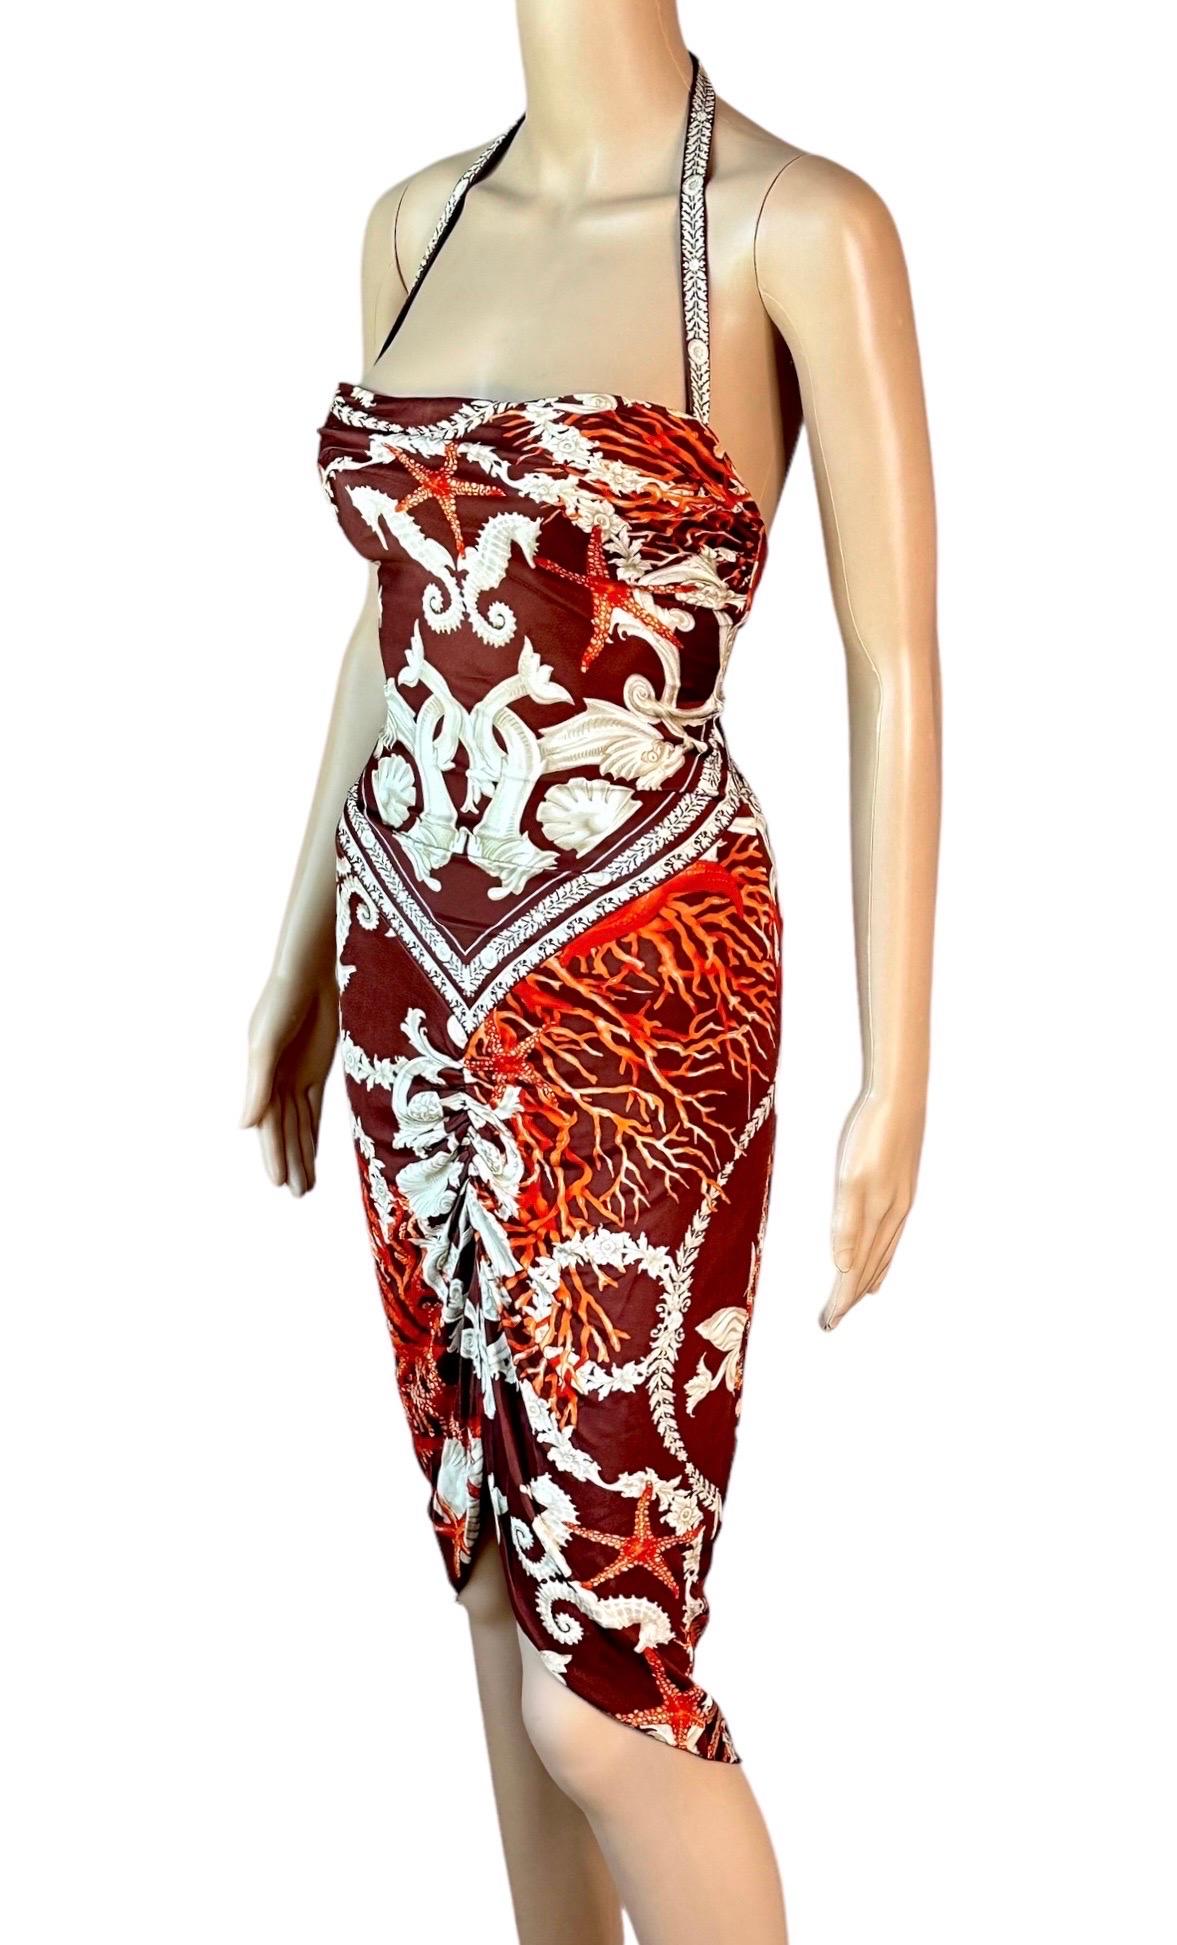 Versace S/S 2005 Embellished Trésor De La Mer Print Cutout Back Halter Dress In Good Condition For Sale In Naples, FL